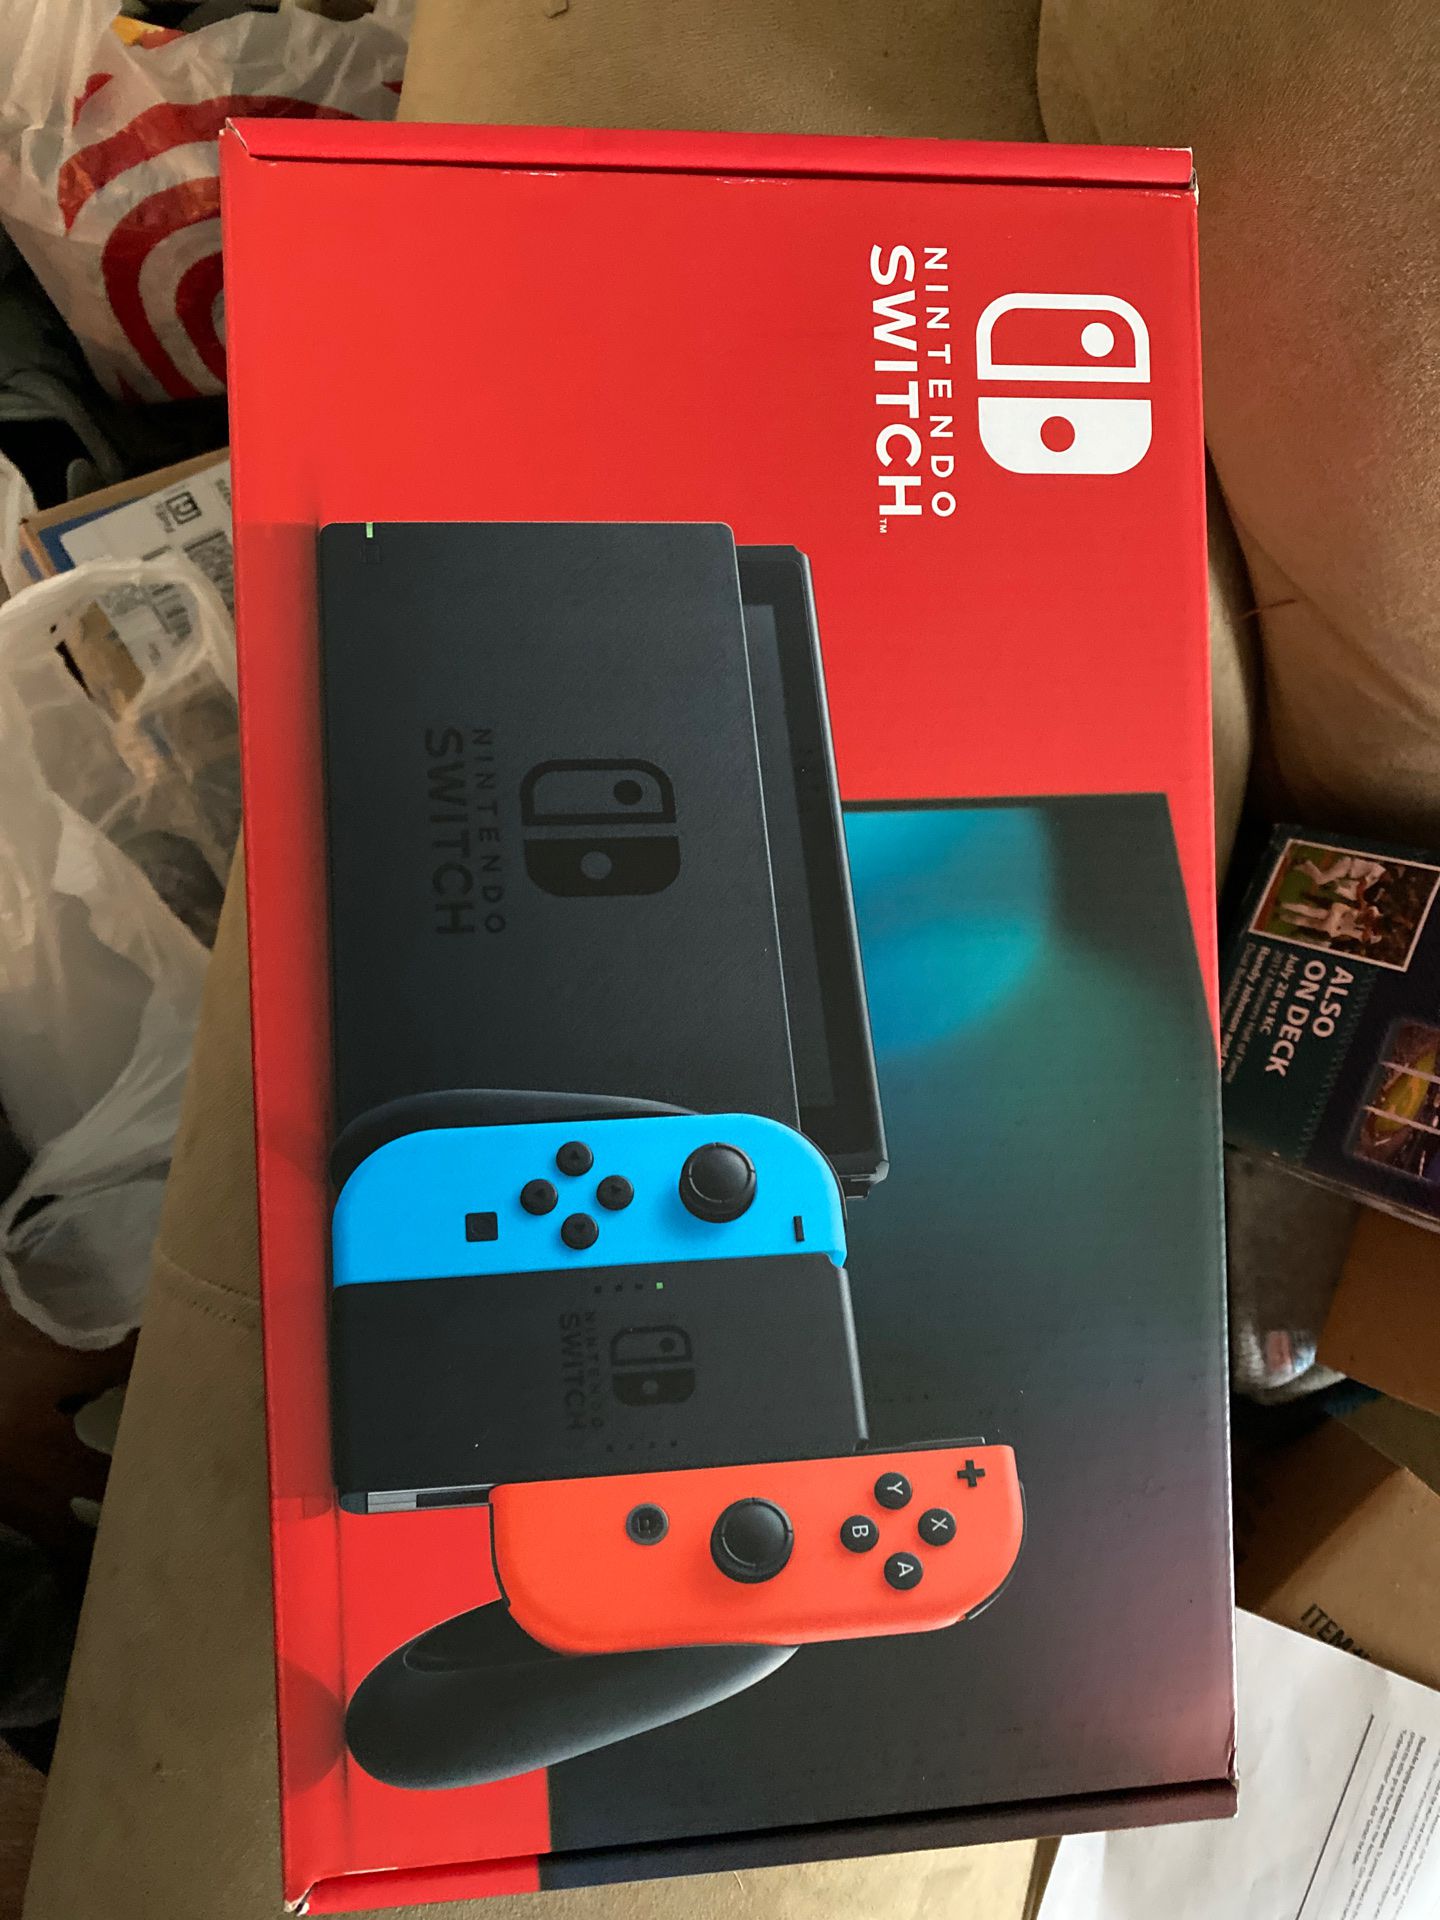 Brand new Nintendo Switch